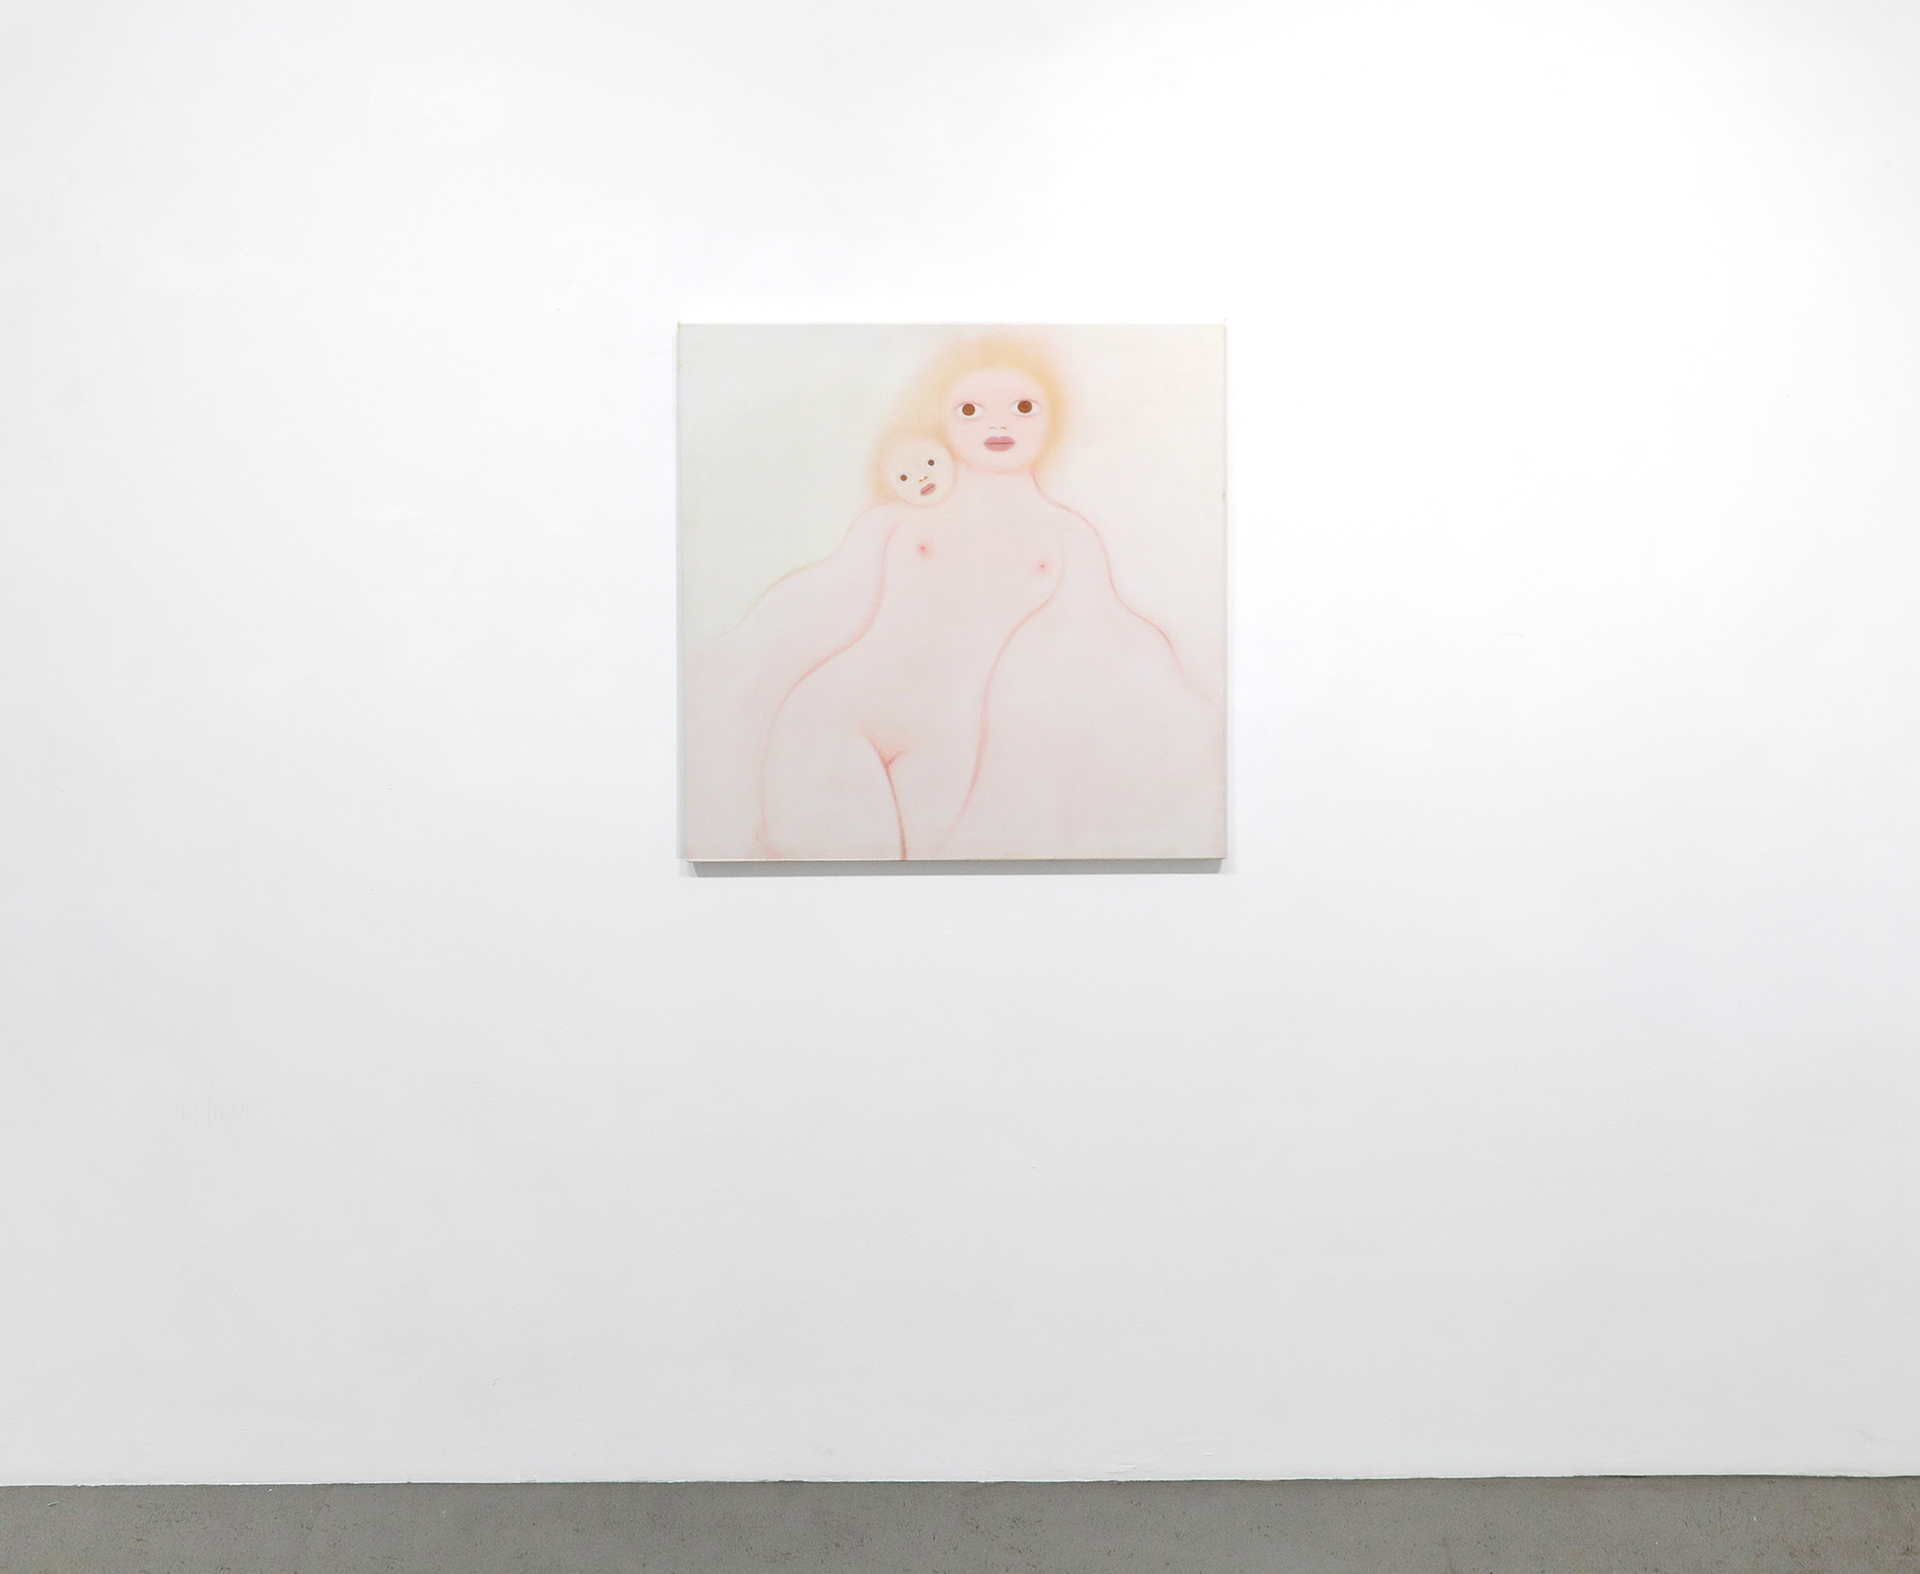 Installation view, Mari Sunna, Lovebirds, 2020, oil on canvas, 85 x 85 cm